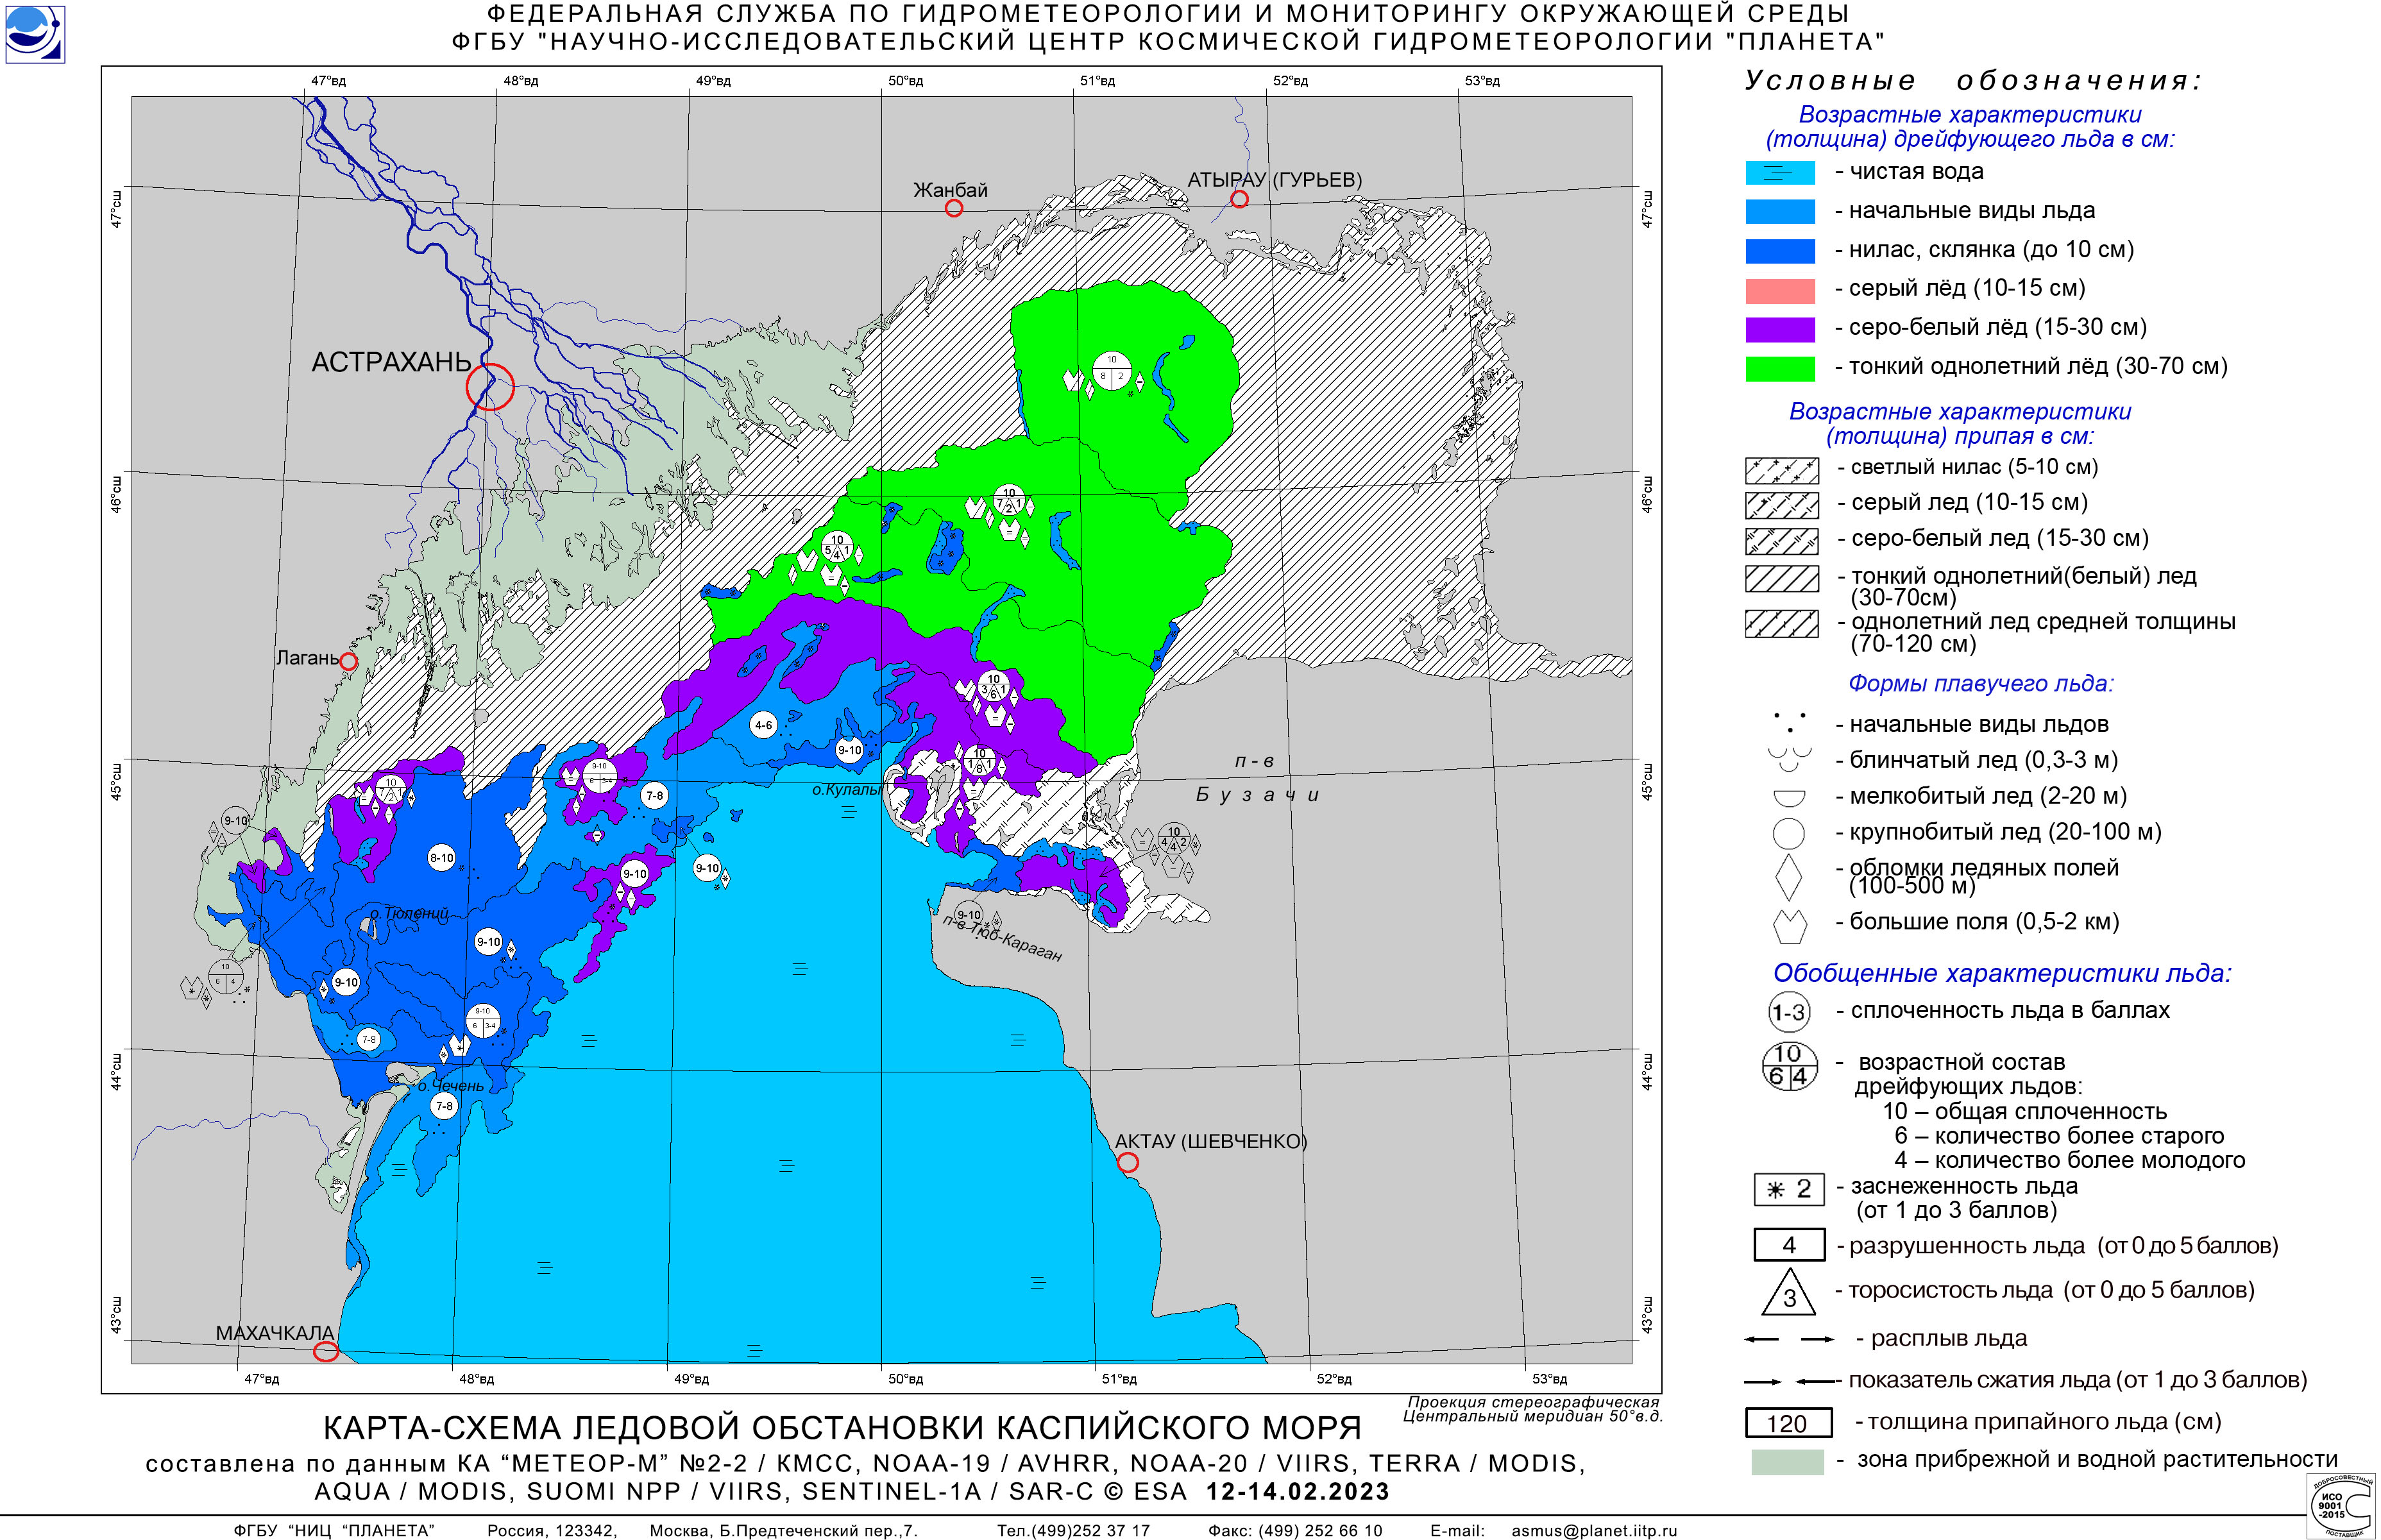 Карта схема ледового покрова каспийского моря